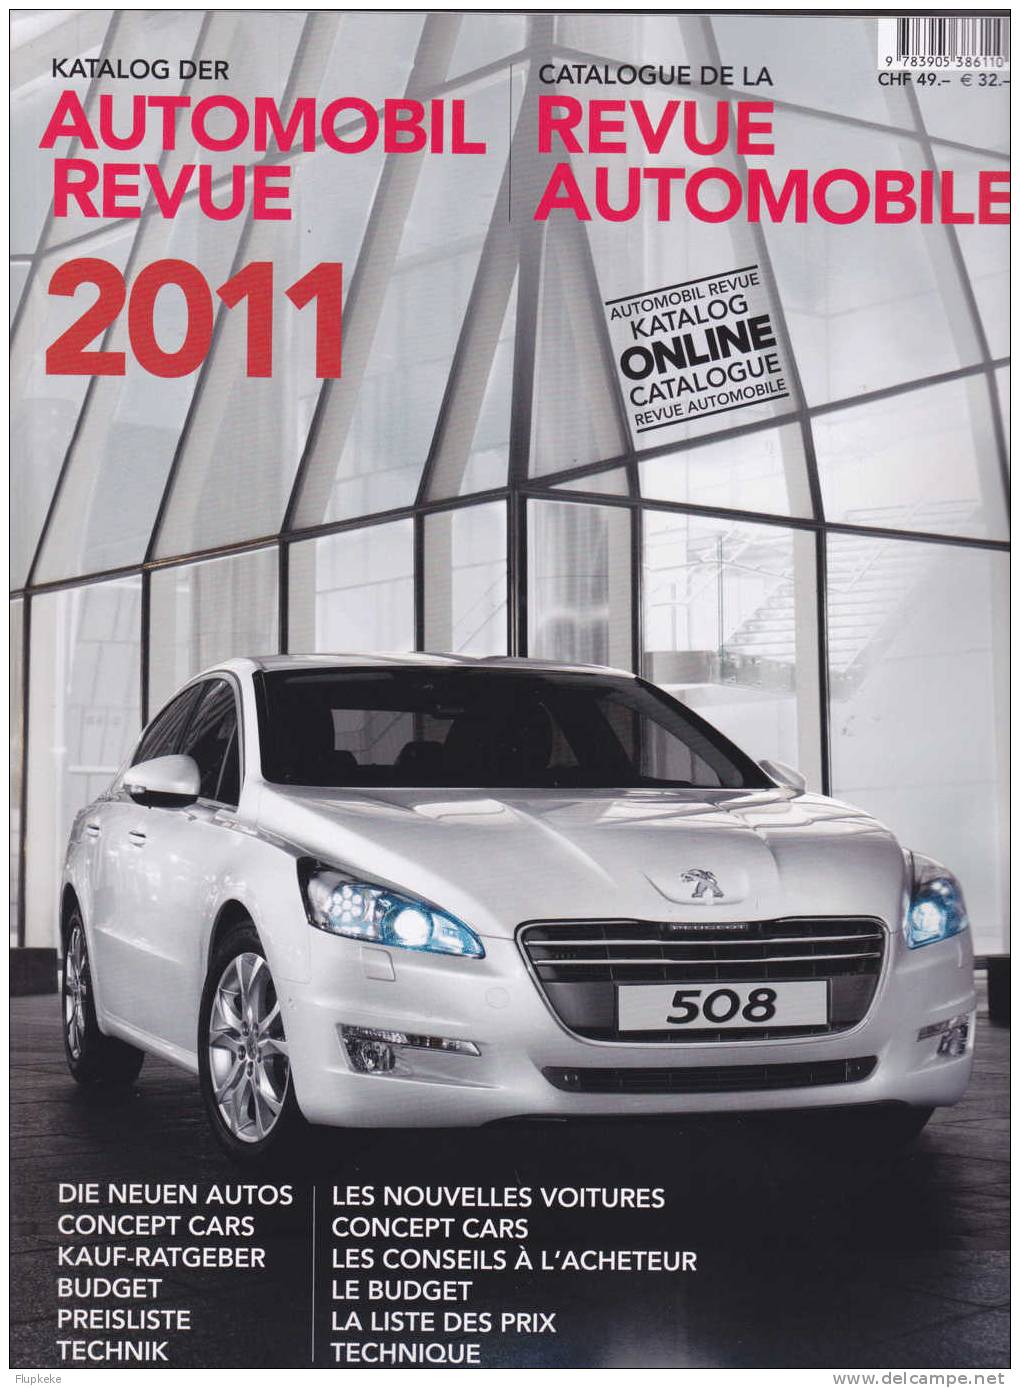 Catalogue De La Revue Automobile - Katalog Der Automobil Revue 2011 - Automobili & Trasporti